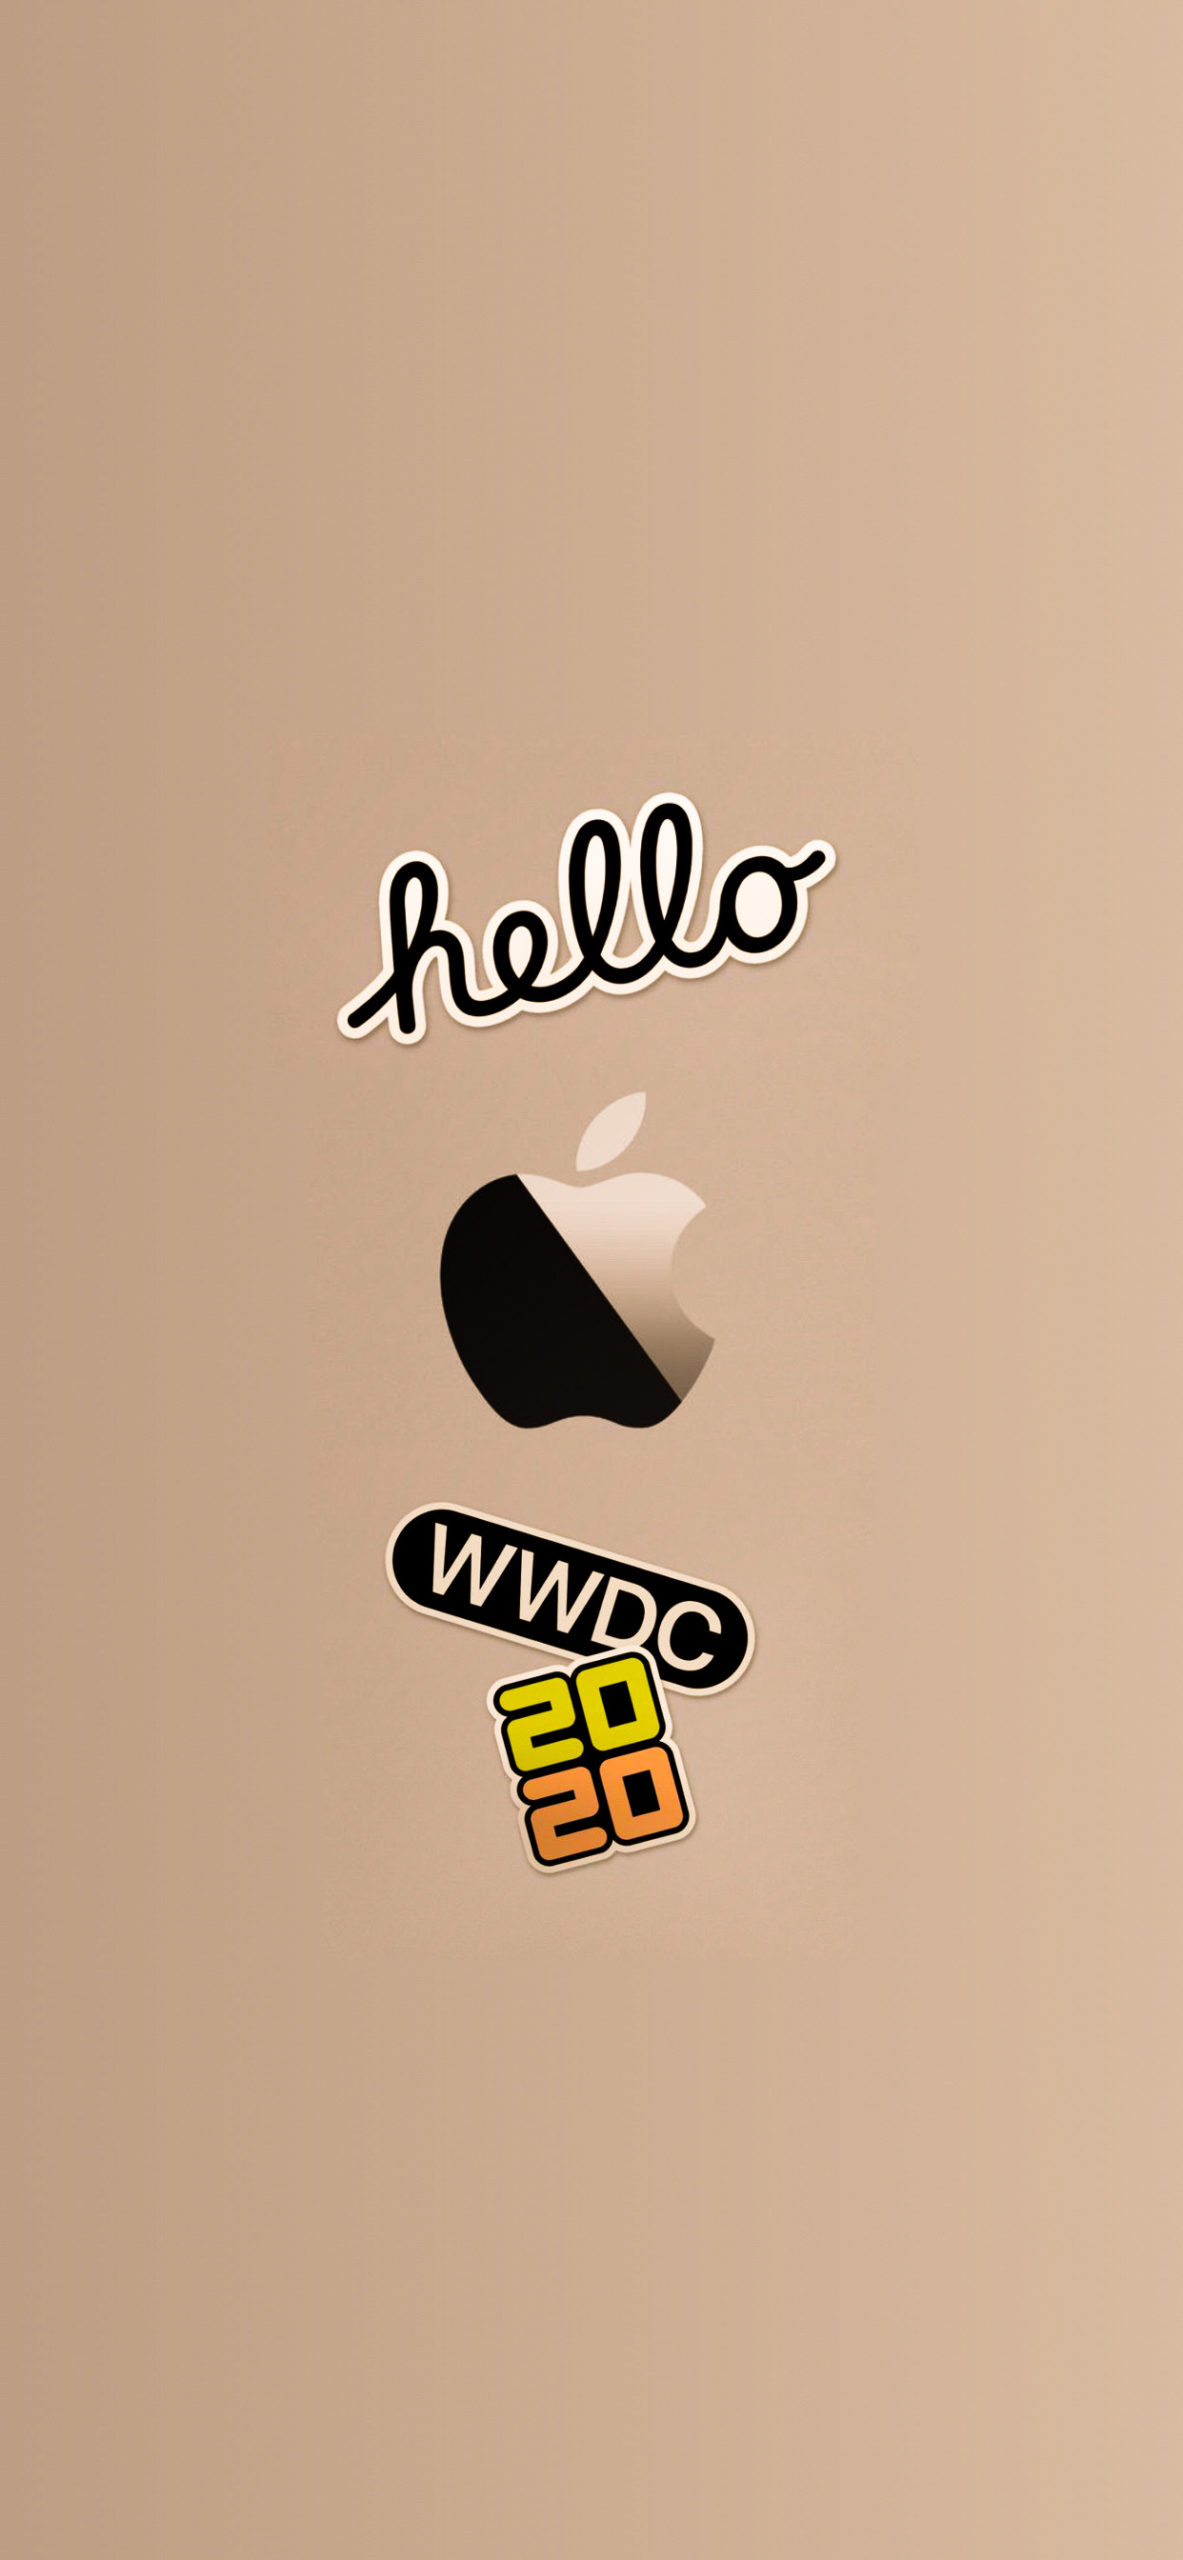 wwdc-2020-wallpaper-iphone-ar72014-idownloadblog-Logos-gold